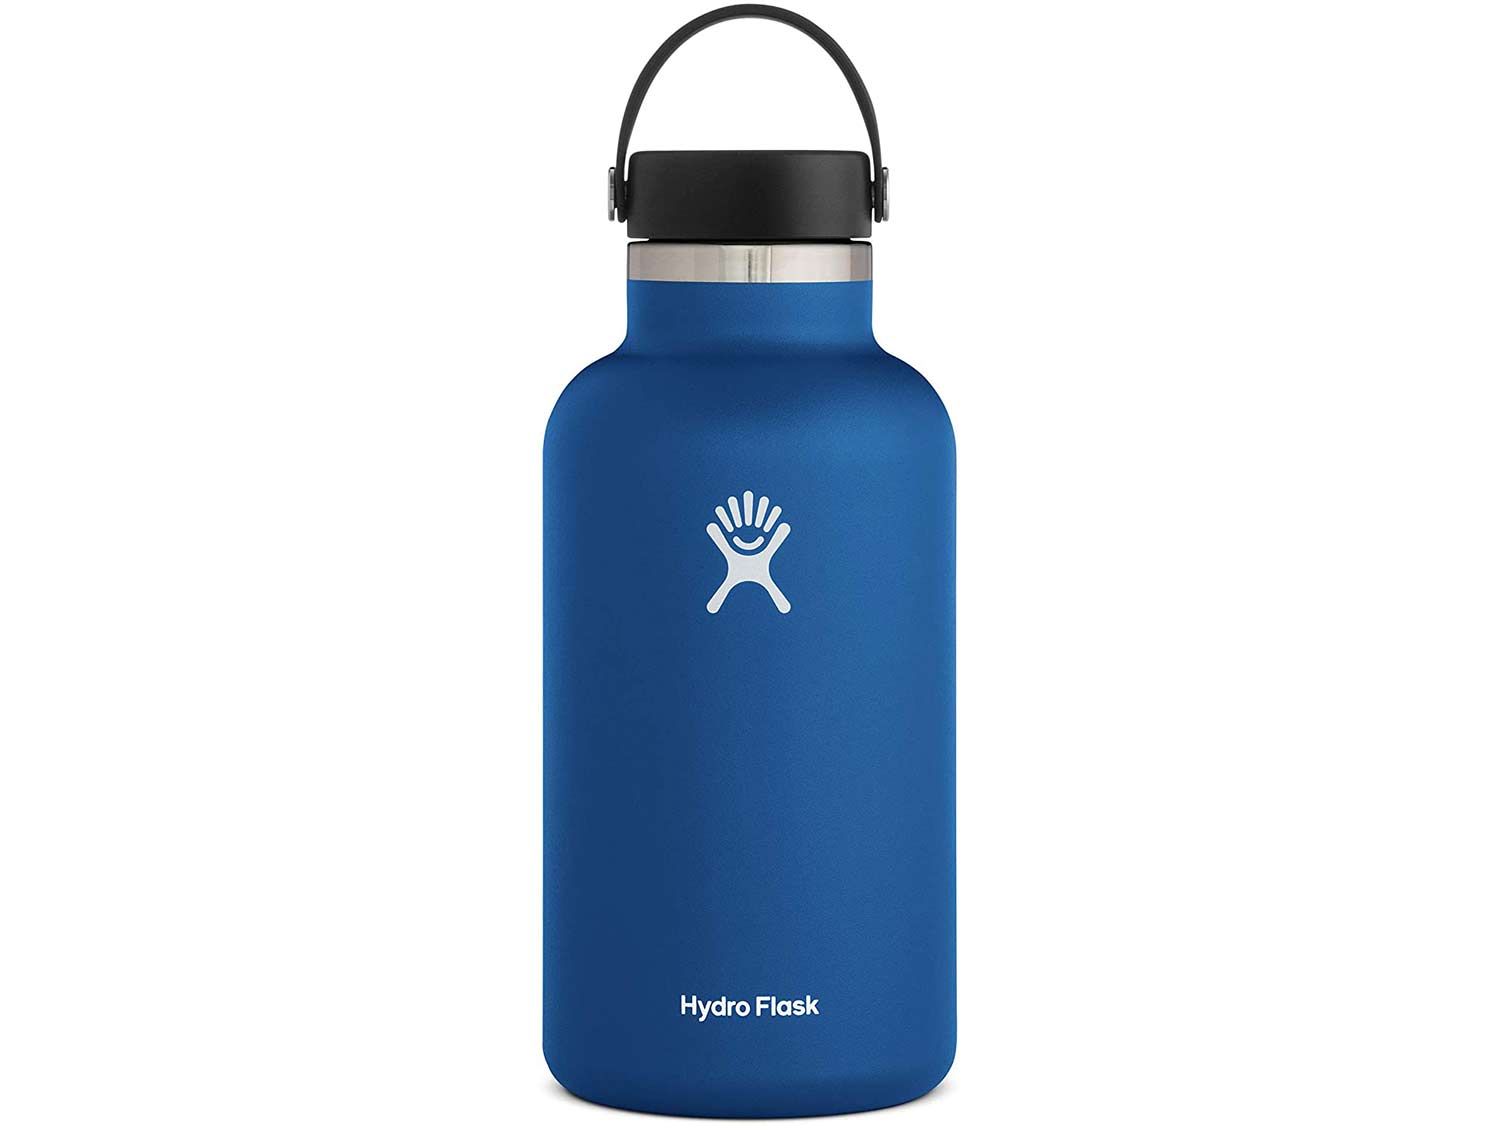 Bulletin Brands: Takeya Originals 18 oz. Insulated Water Bottle